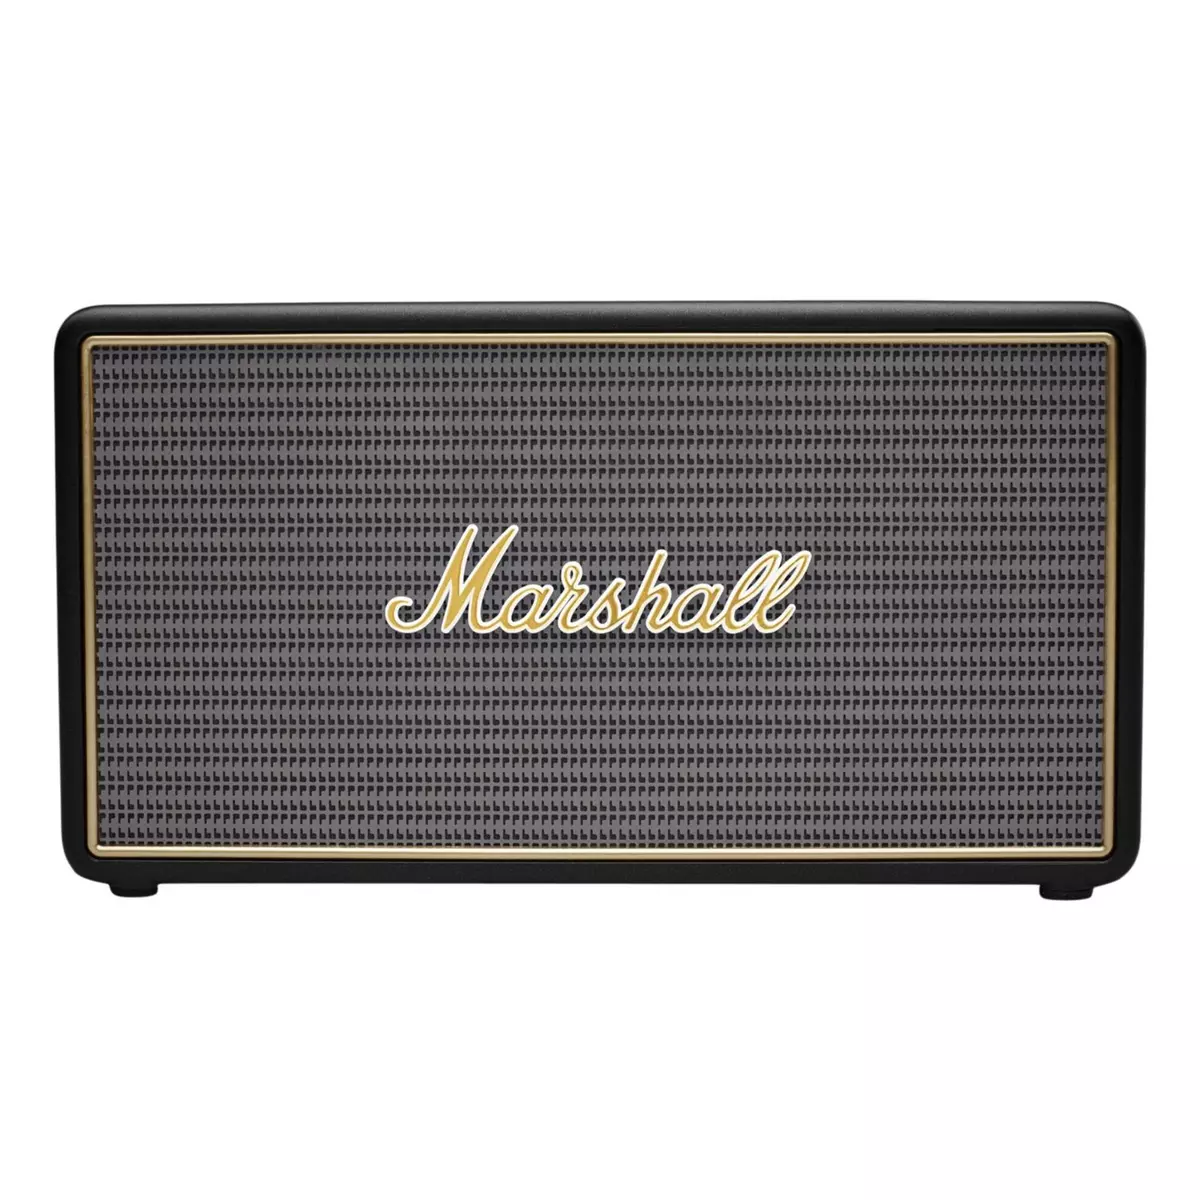 MARSHALL Enceinte portable Bluetooth - Noir - Stockwell